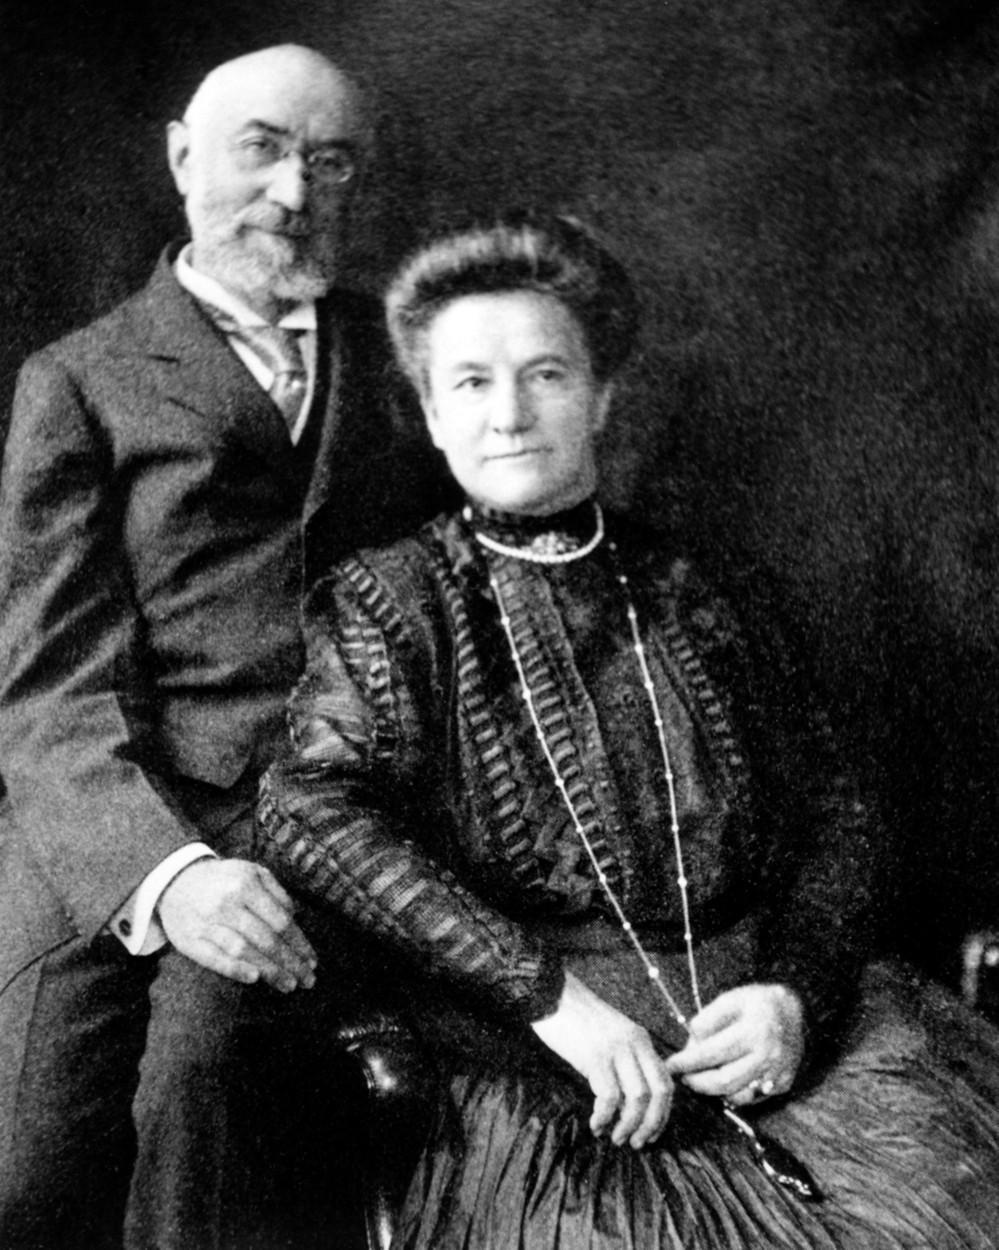 poza portret, alb-negru, cu Isidor și Ida Straus, imbracati elegant, cu o postura protocolara